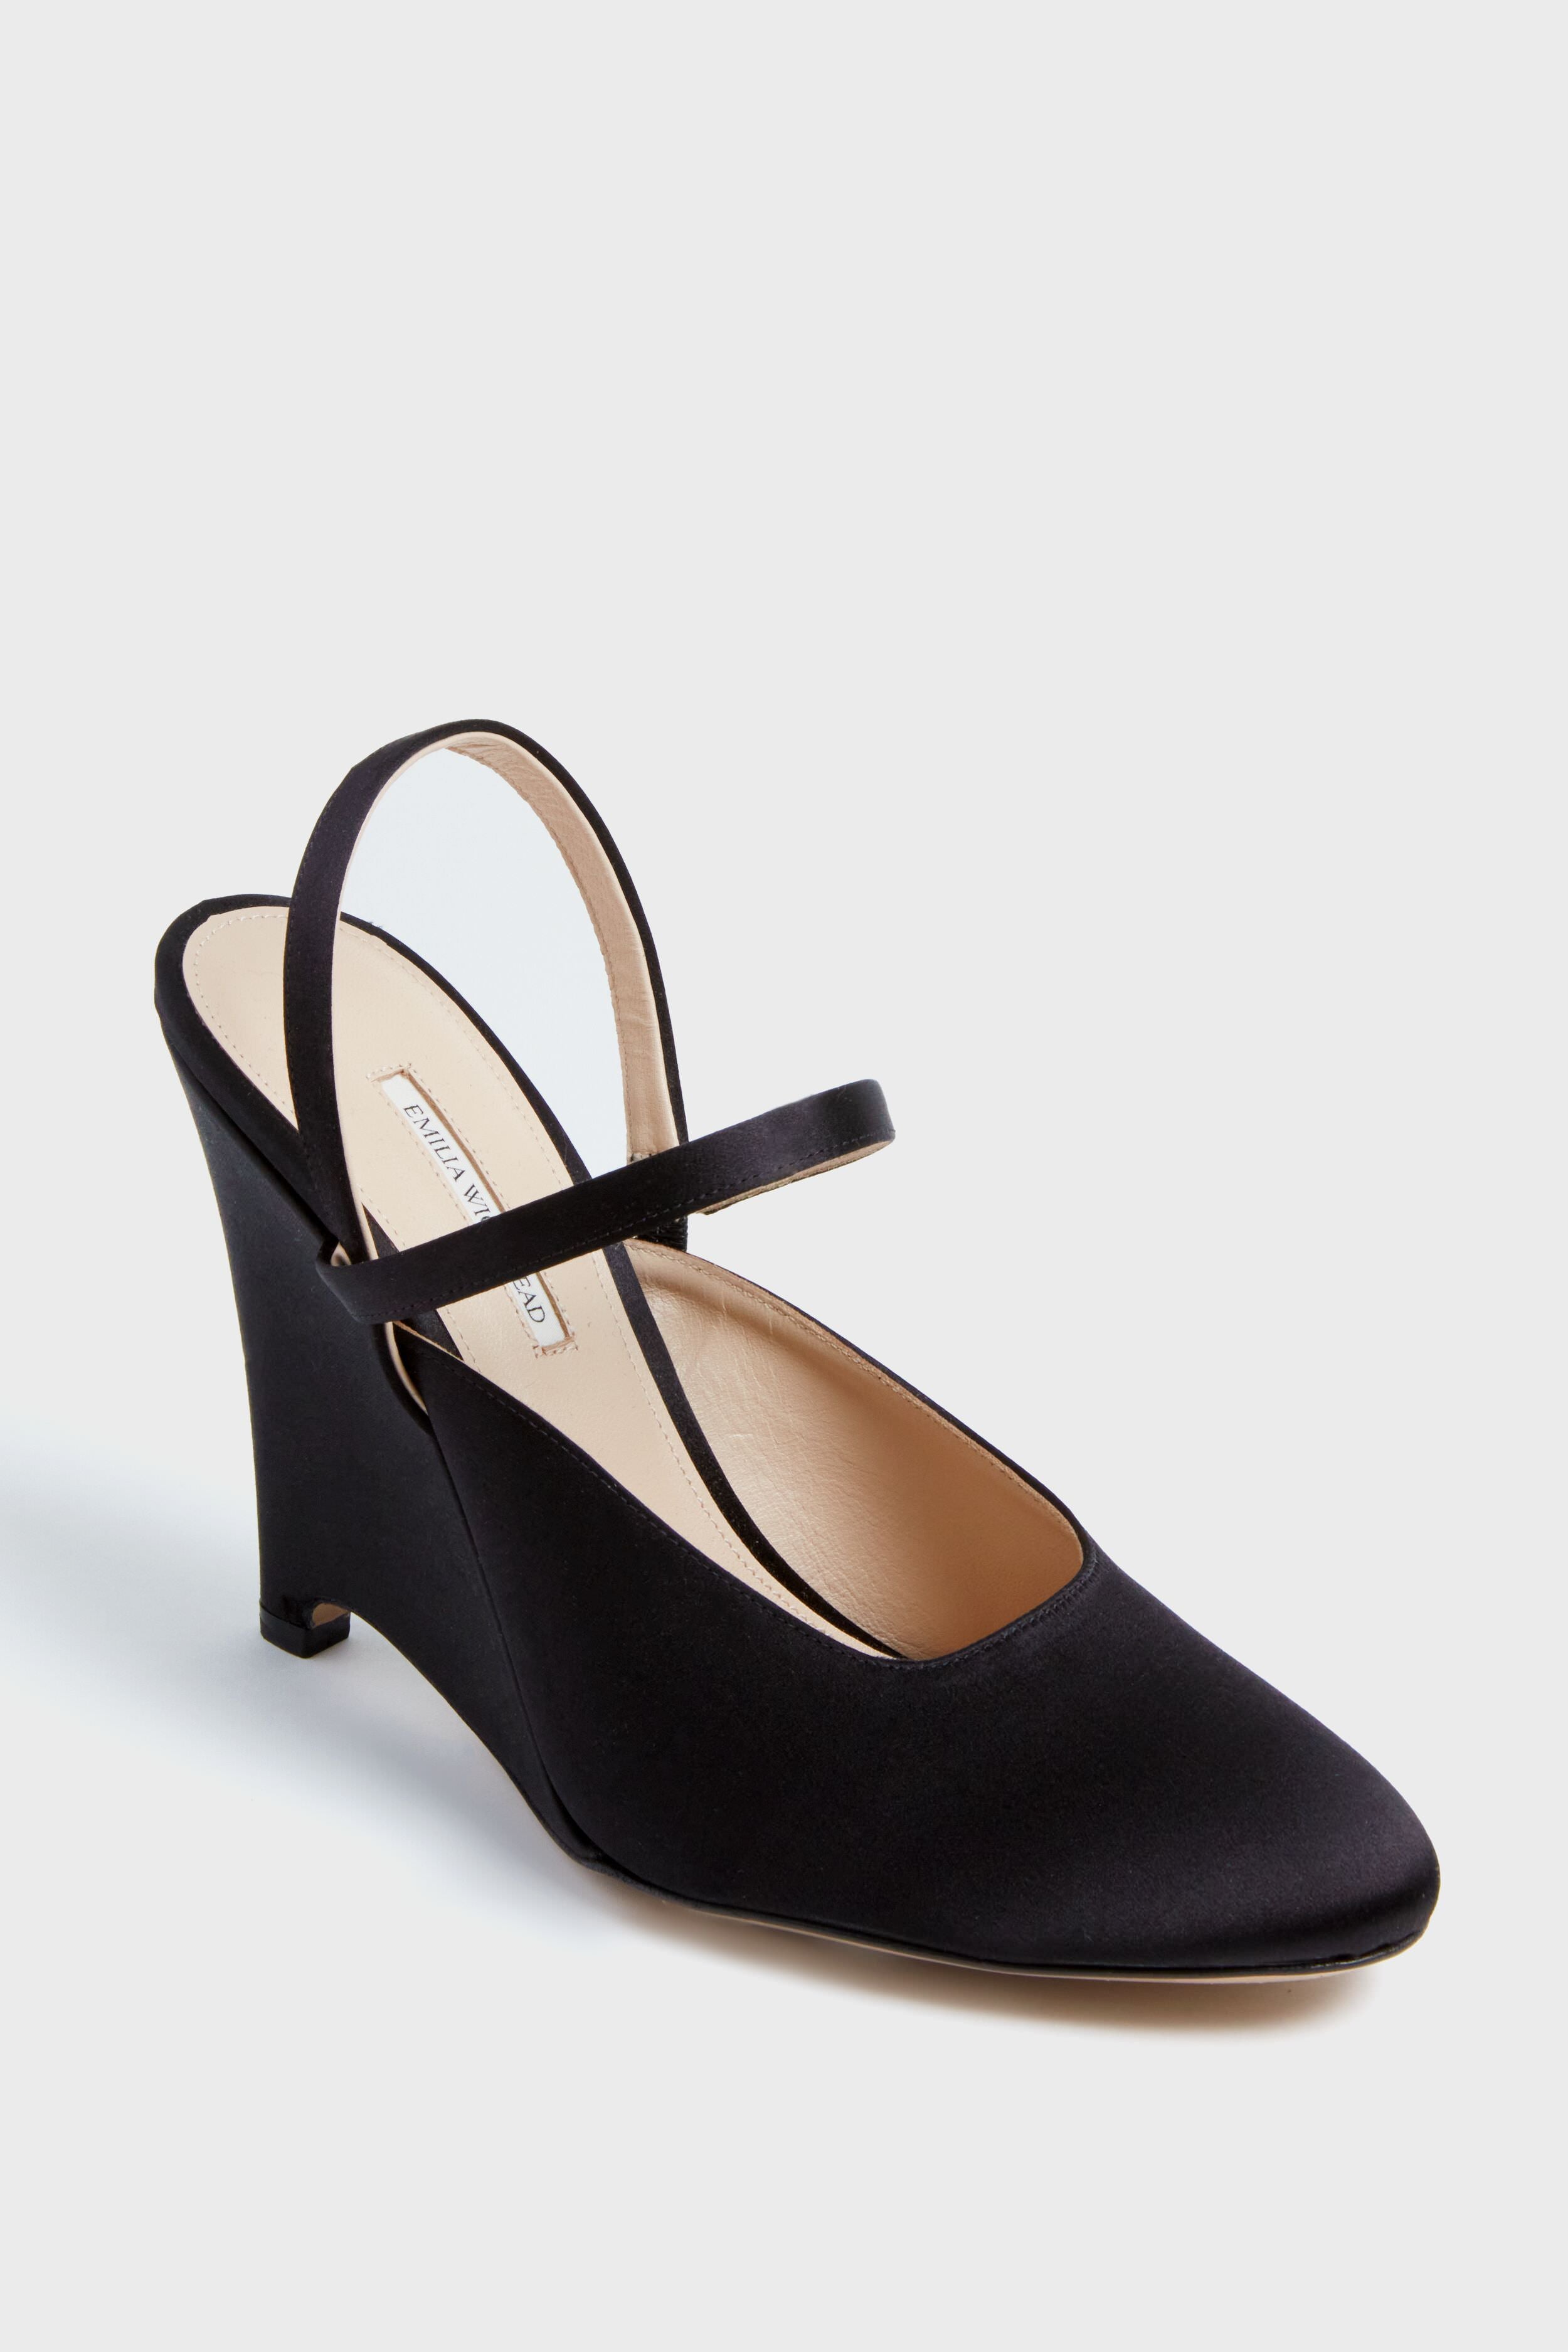 Womens Peep Toe Platform Wedge Sandals Ankle Strap Zipper High Heels Party  Shoes | eBay